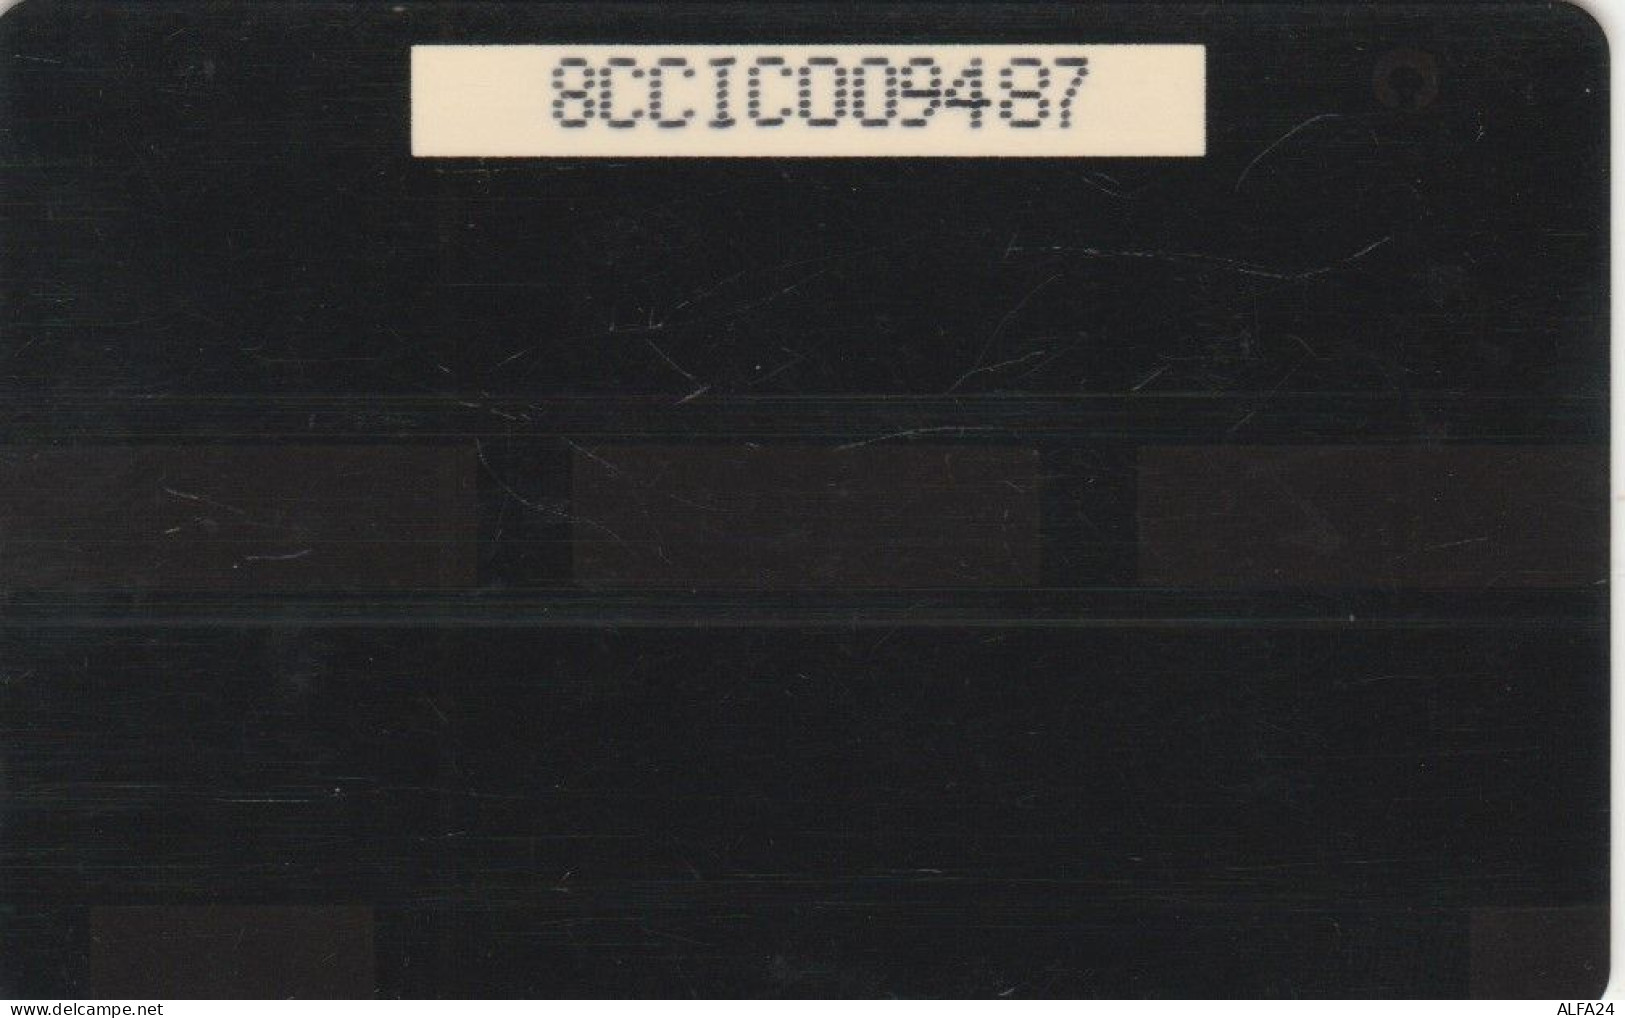 PHONE CARD CAYMAN ISLAND  (E110.6.6 - Kaaimaneilanden